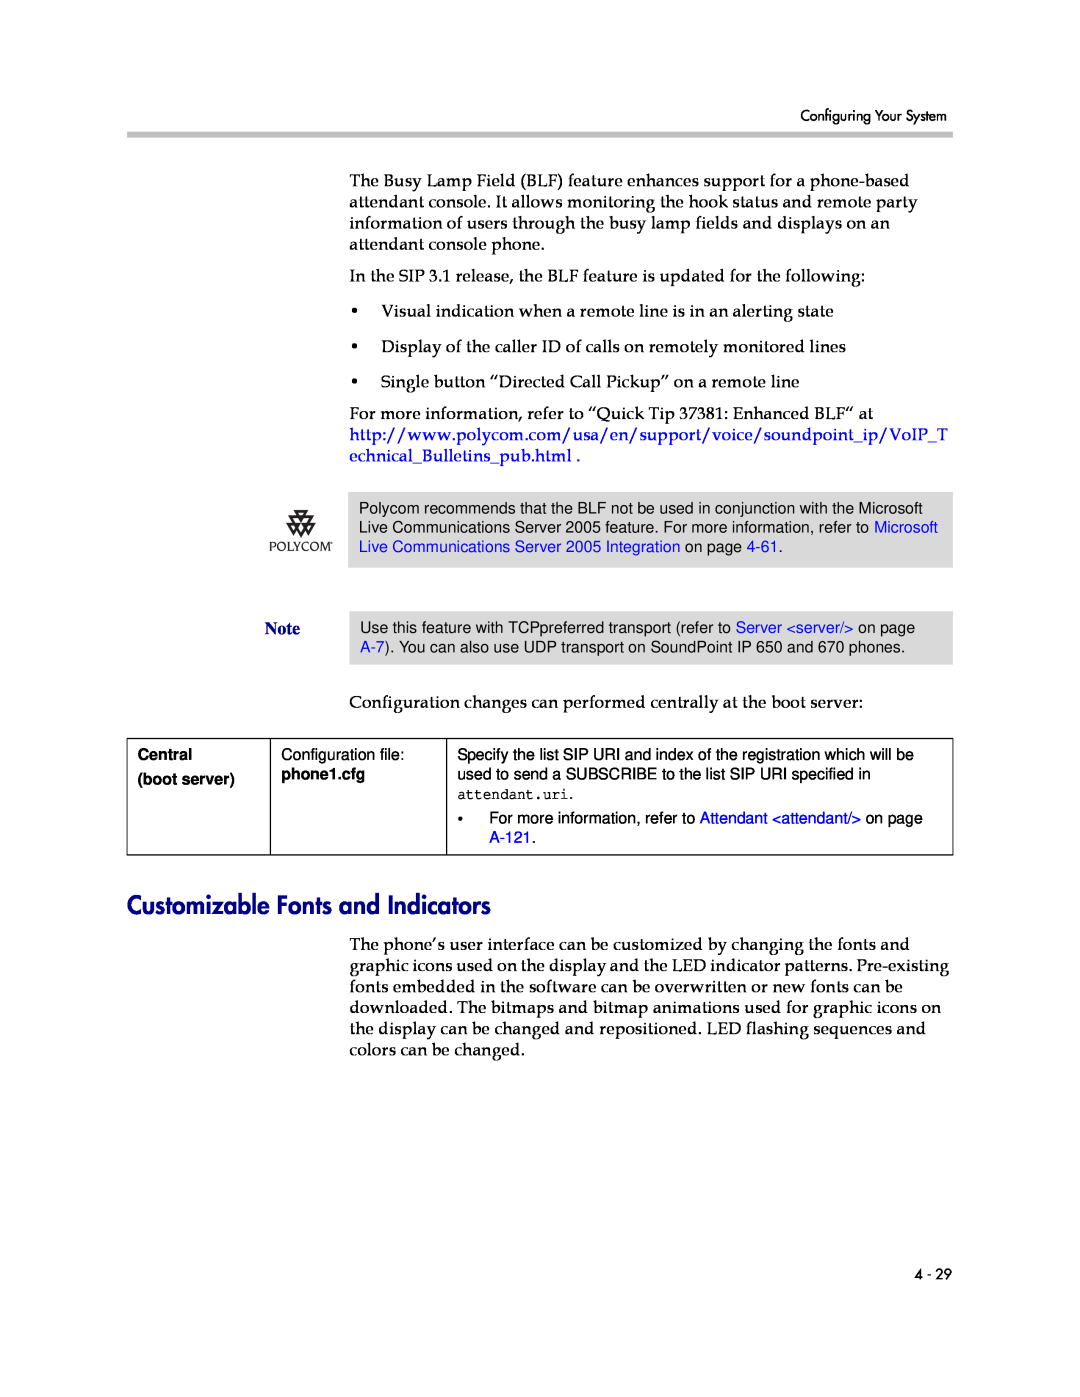 Polycom SIP 3.1 manual Customizable Fonts and Indicators, echnicalBulletinspub.html 